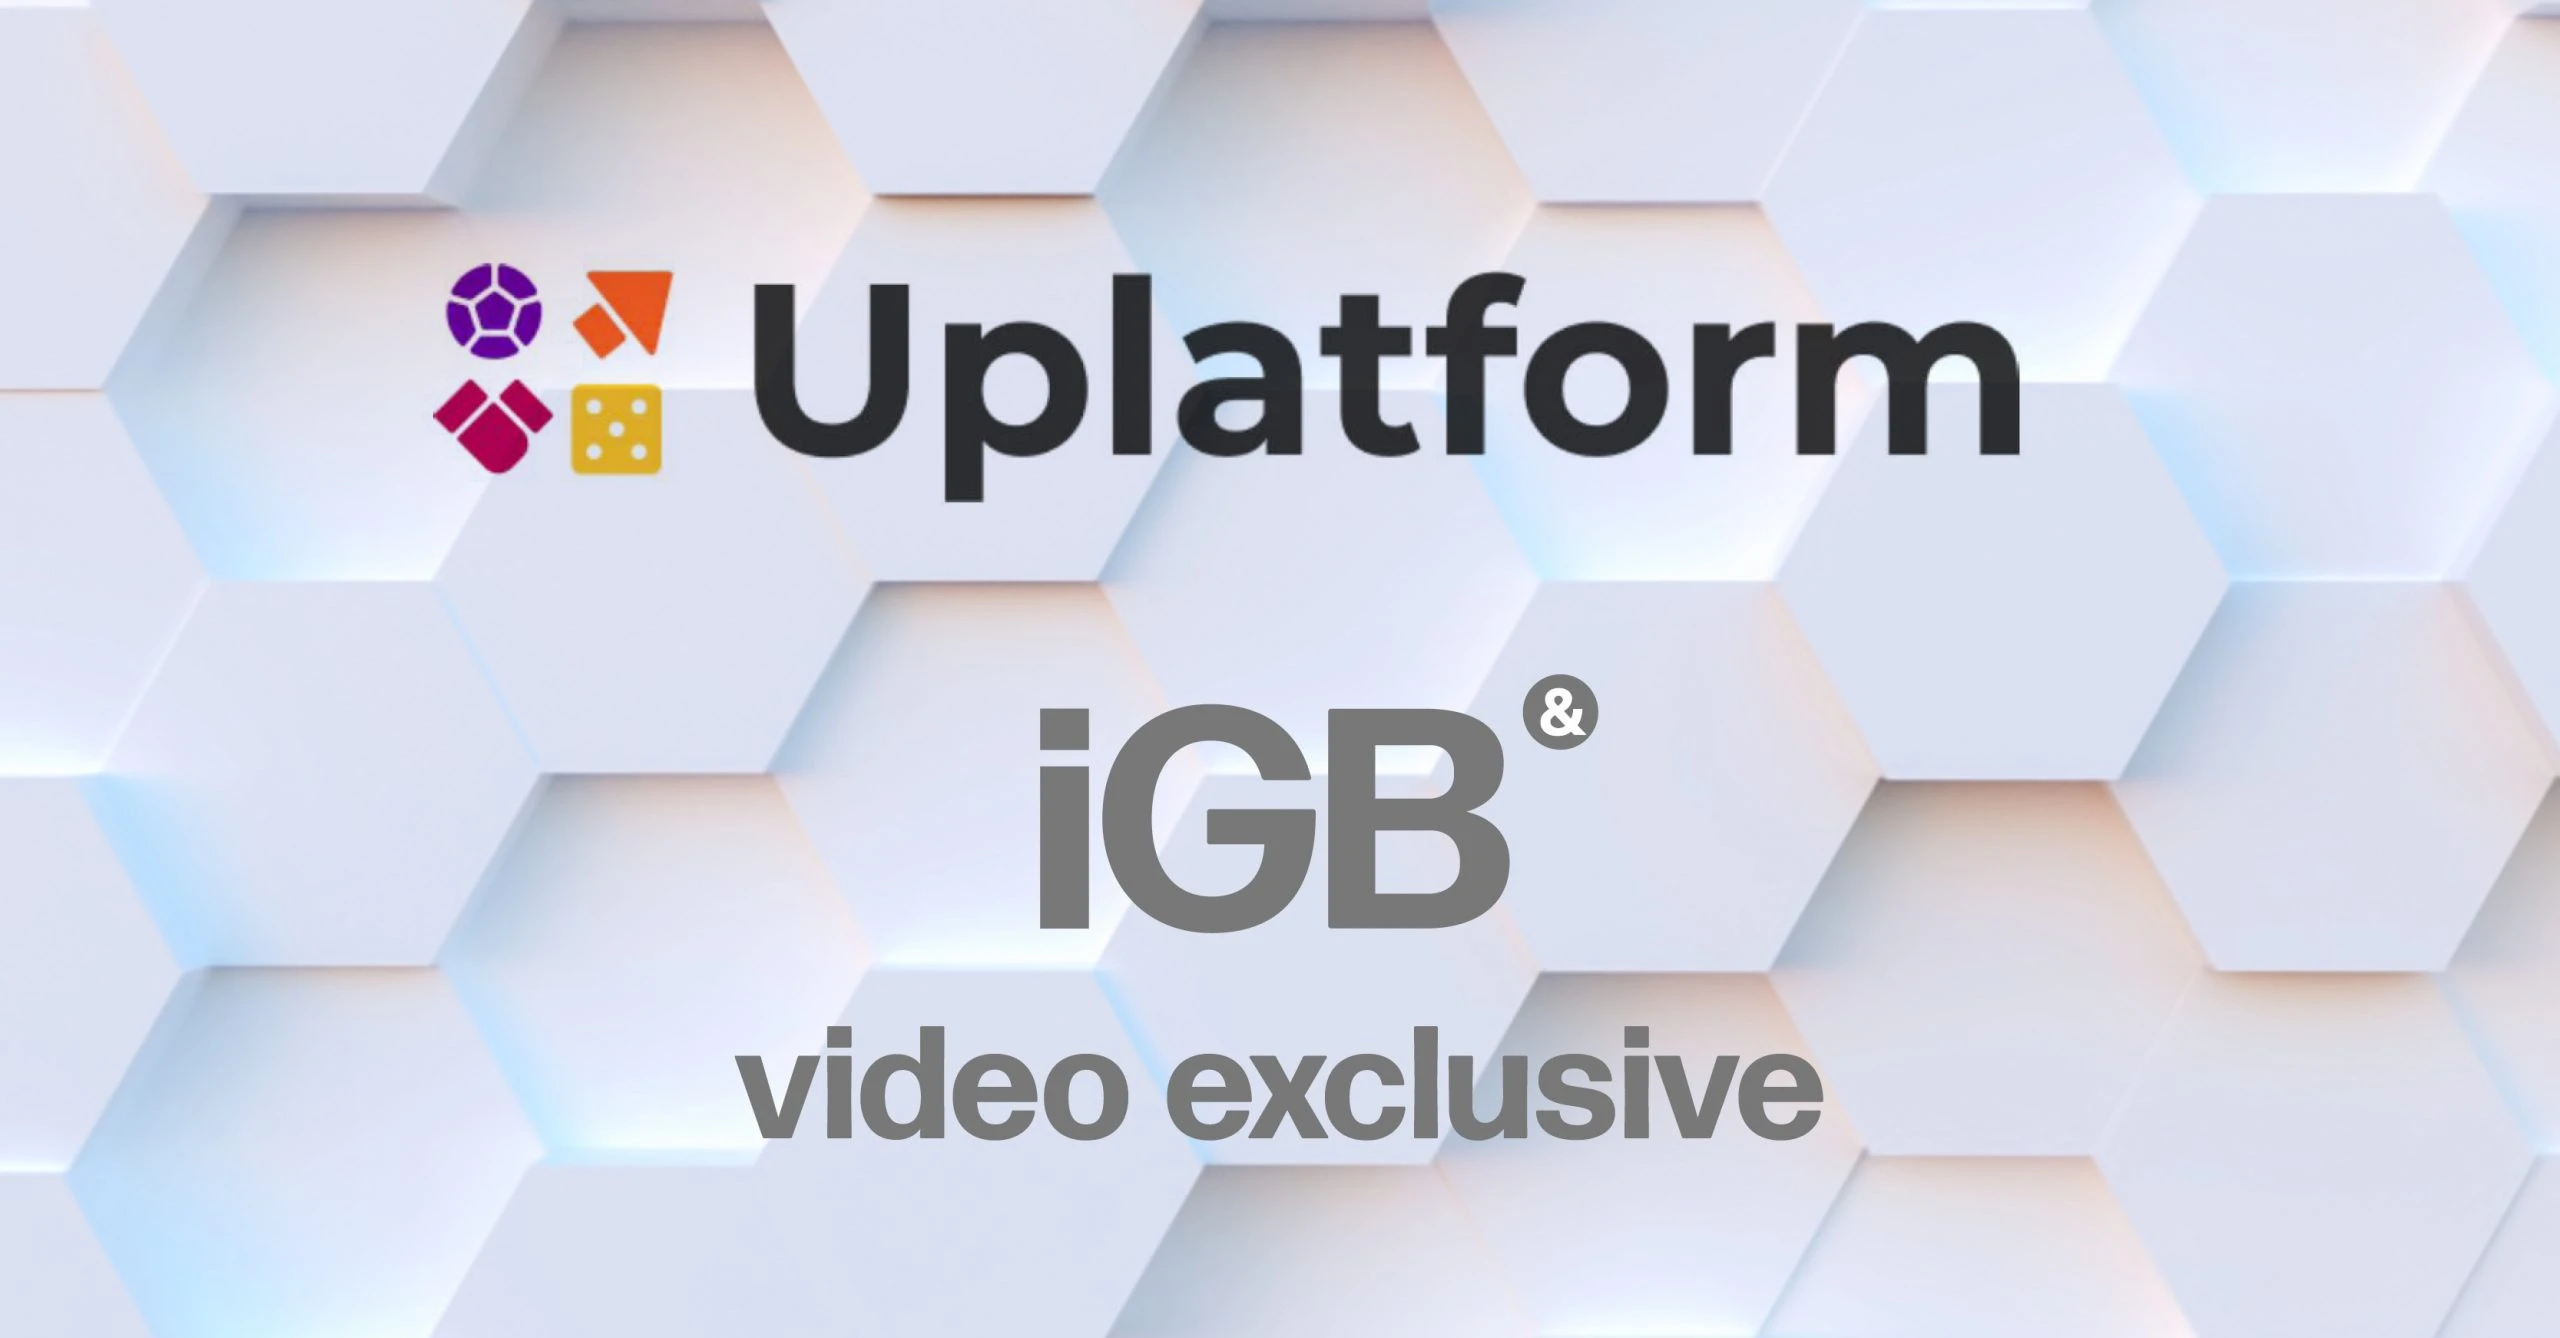 iGB video exclusive with Uplatform